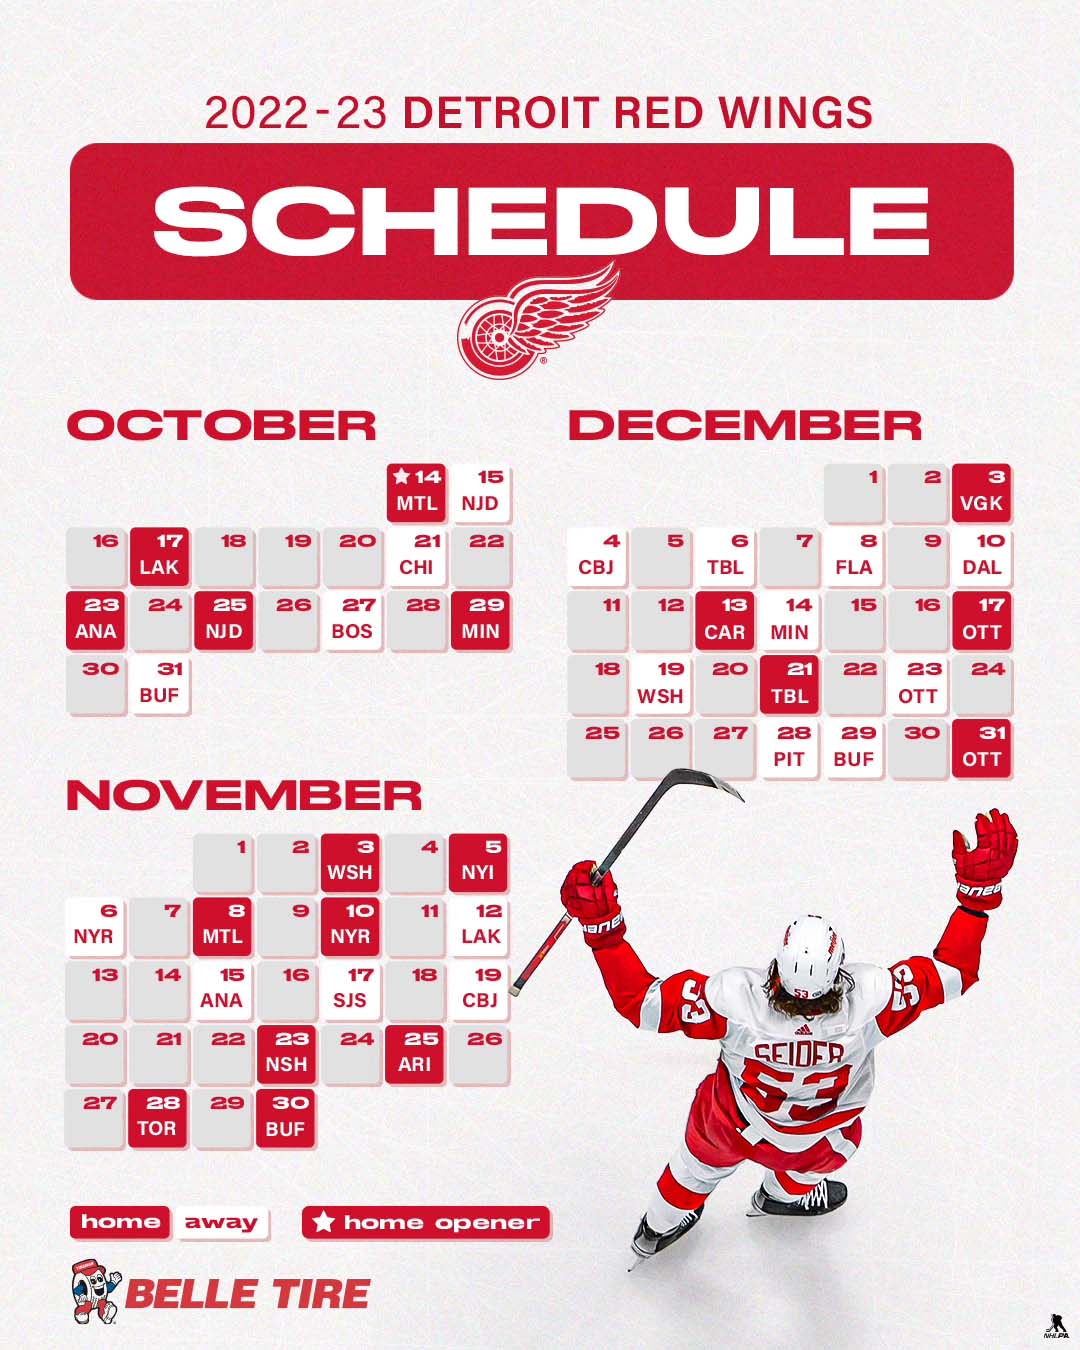 Detroit Red Wings on Twitter "Our full 202223 regular season schedule